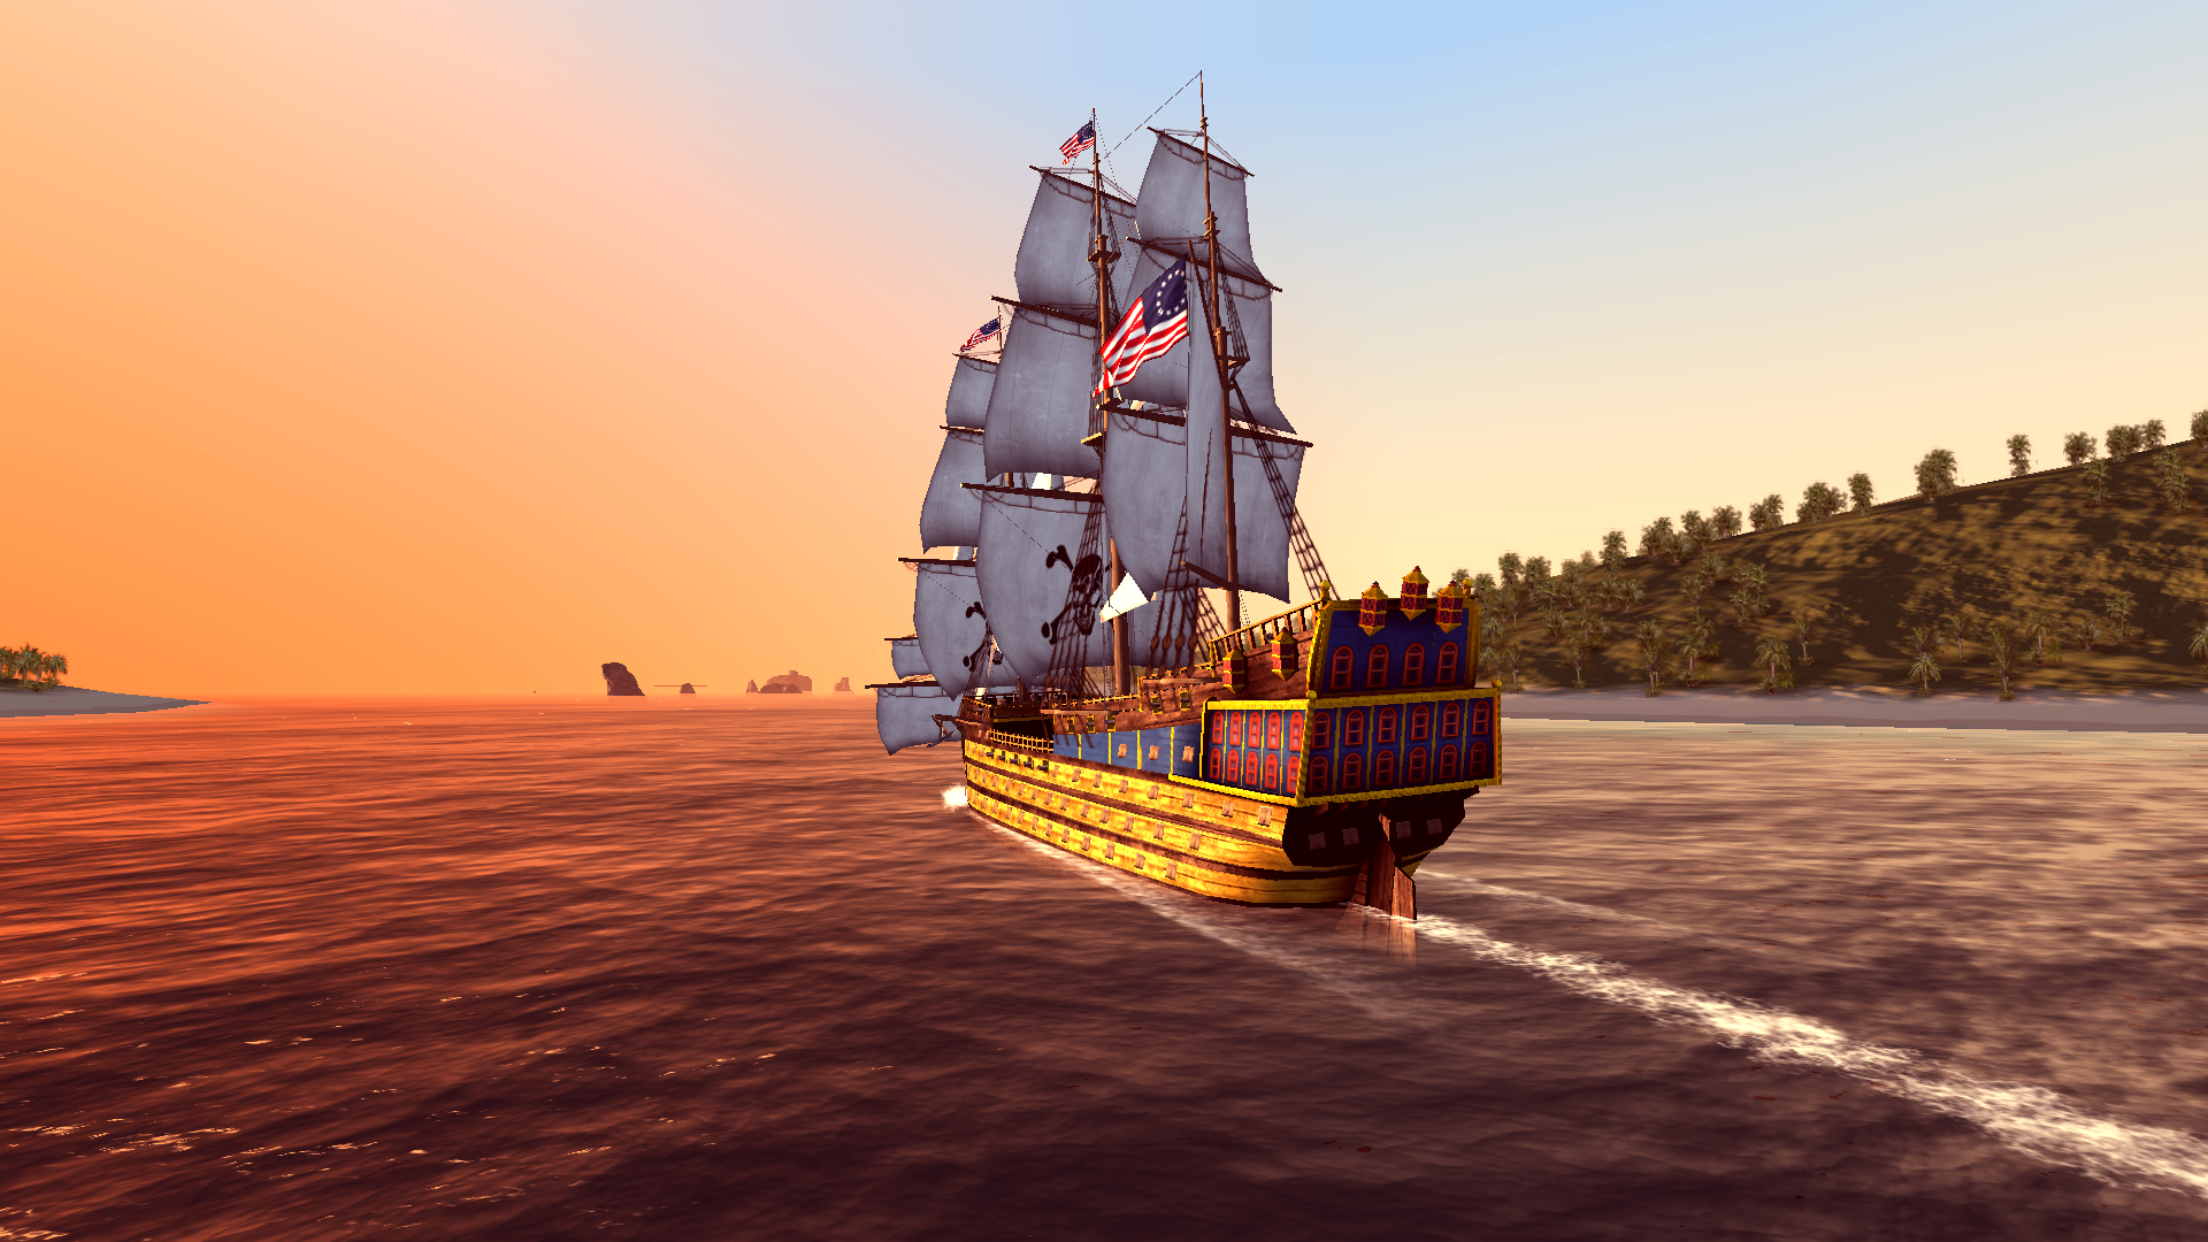 the pirate caribbean hunt ship list